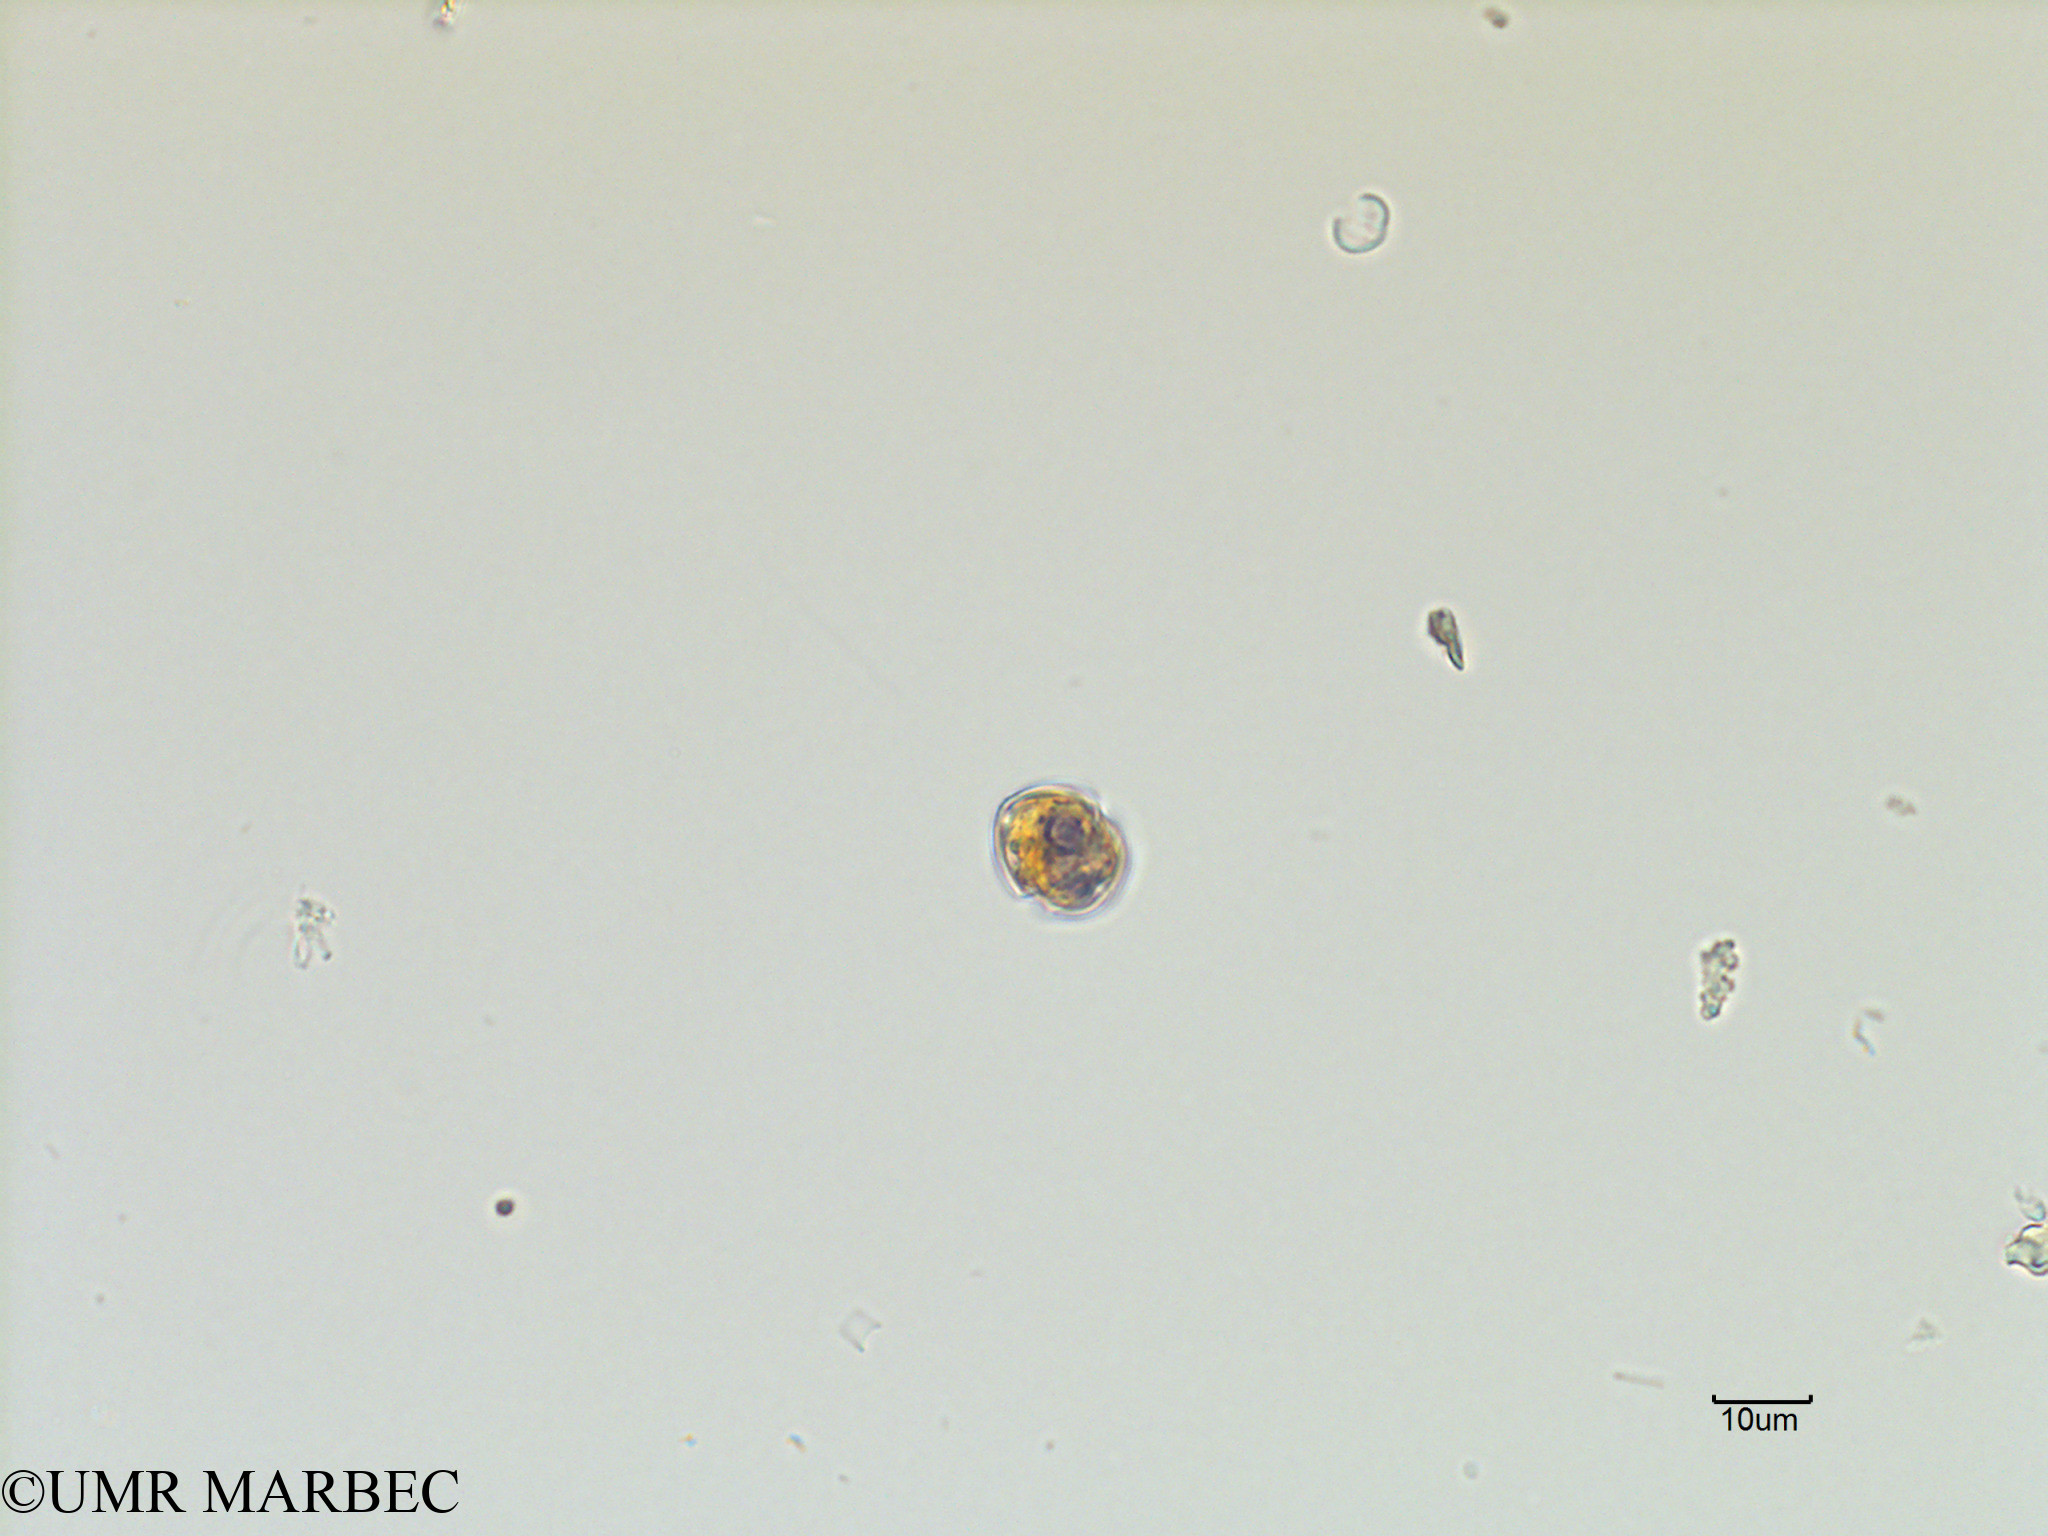 phyto/Scattered_Islands/iles_glorieuses/SIREME November 2015/Scrippsiella spp (SIREME-Glorieuses2015-ech1-171116-Scrippsiella-11)(copy).jpg